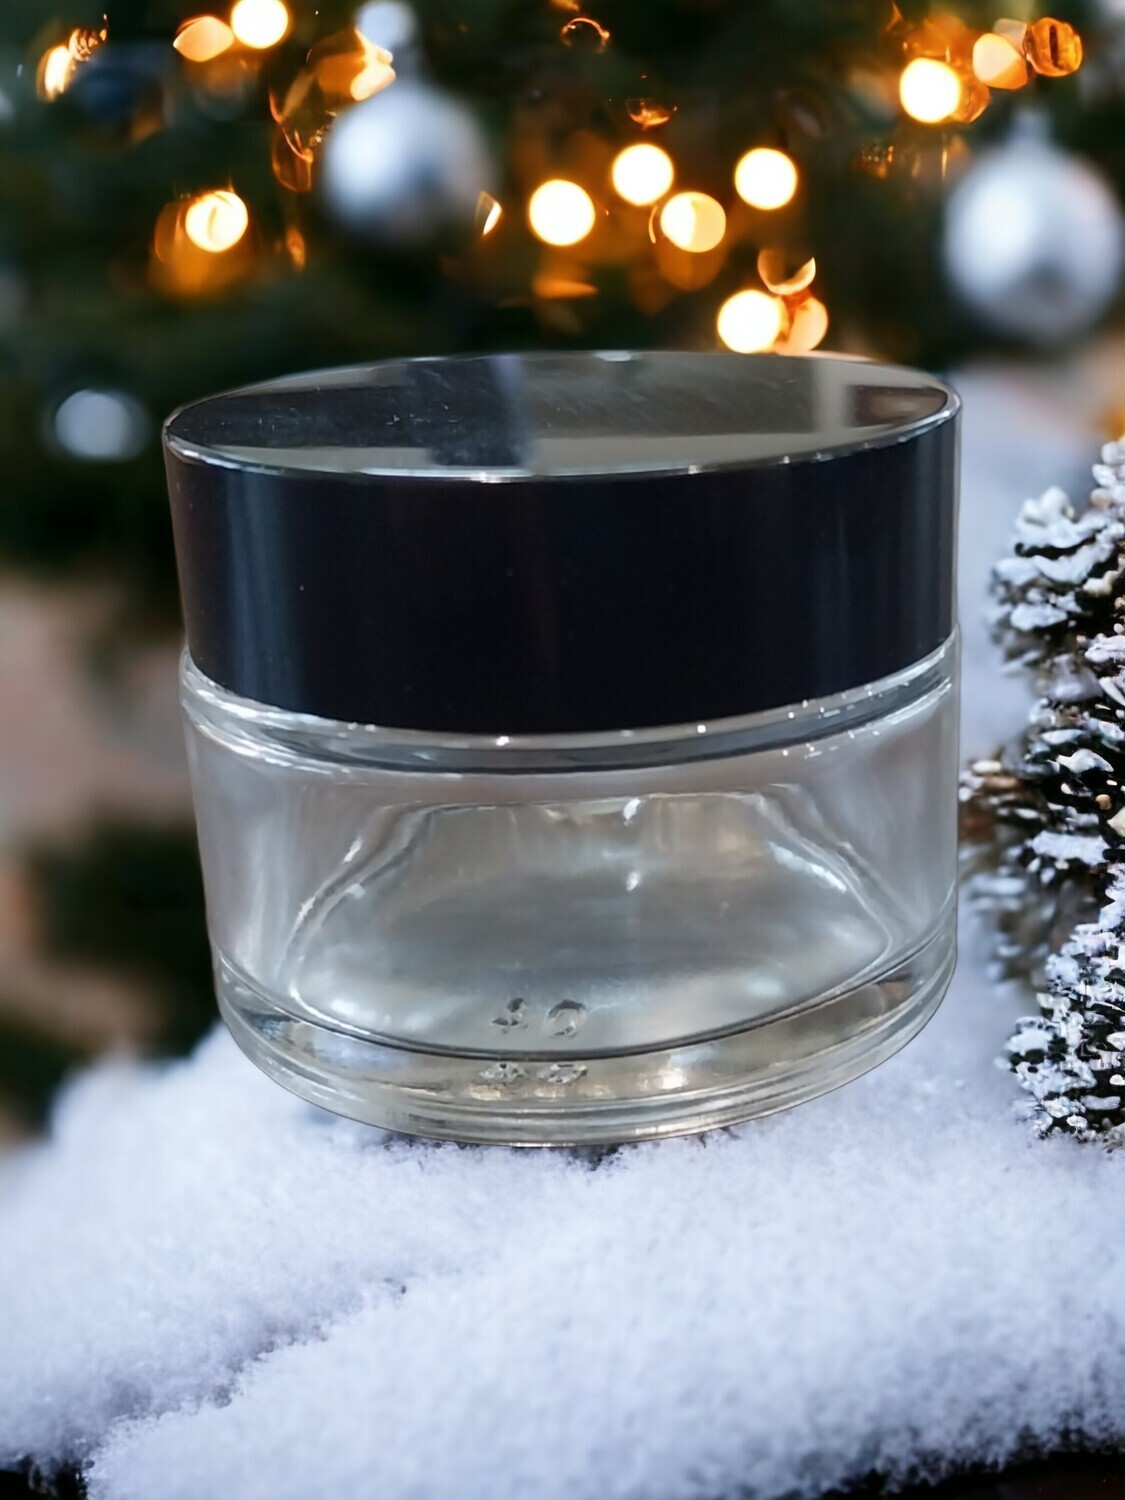 50g CLEAR Glass QUALITY Balm Pot with Caska Seal & BLACK Screw Cap